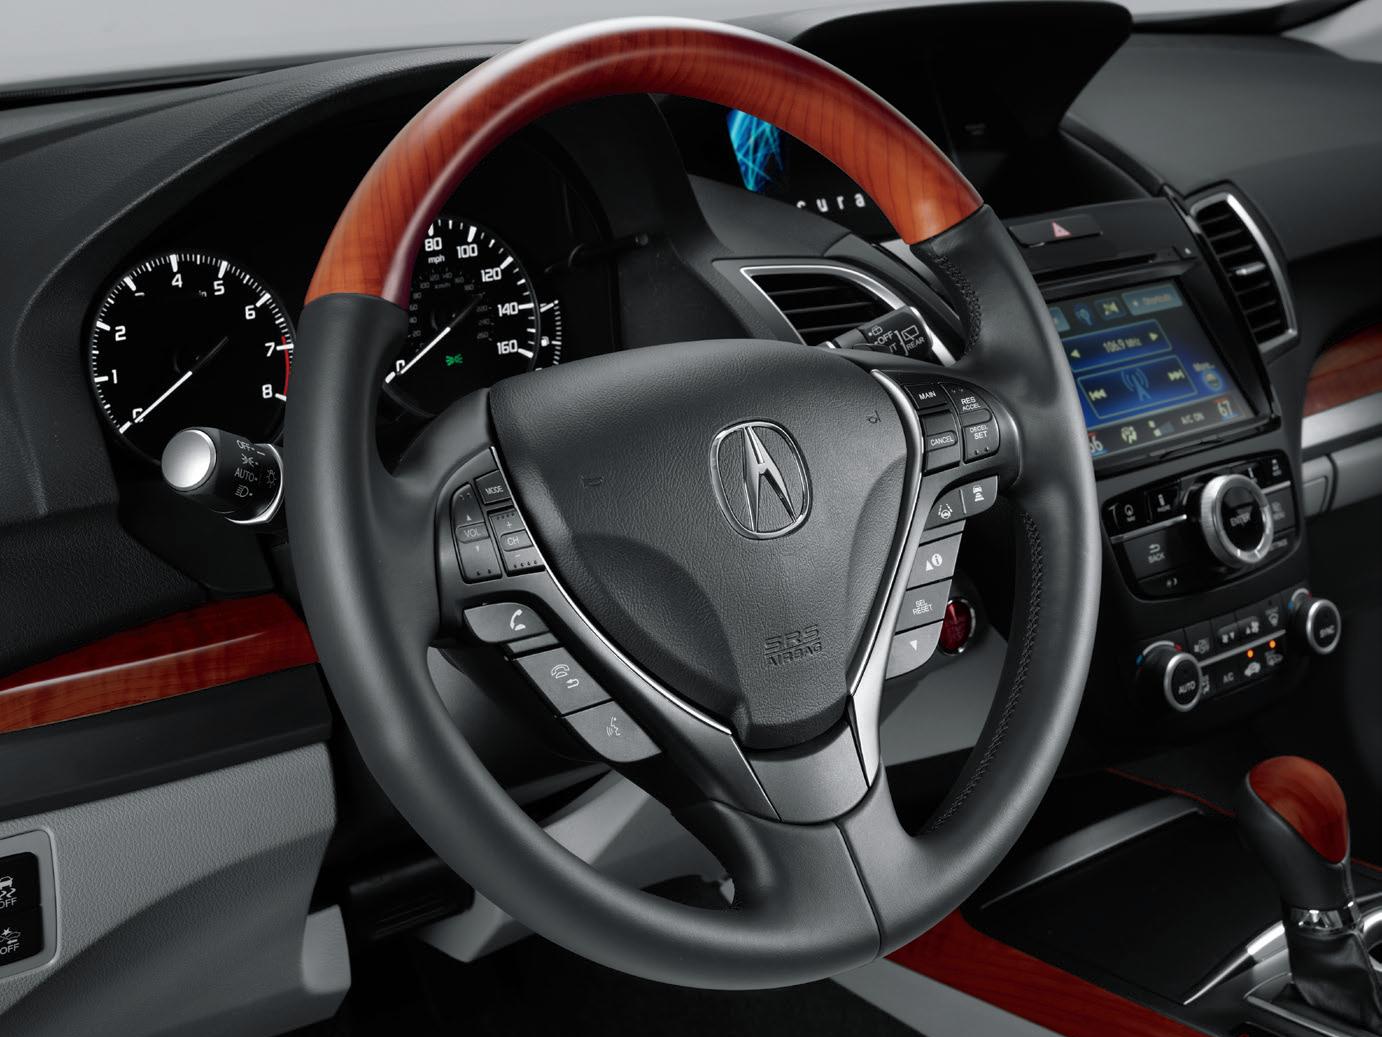 2016 Acura RDX WoodGrain-Look Steering Wheel 08U97-TX4-210